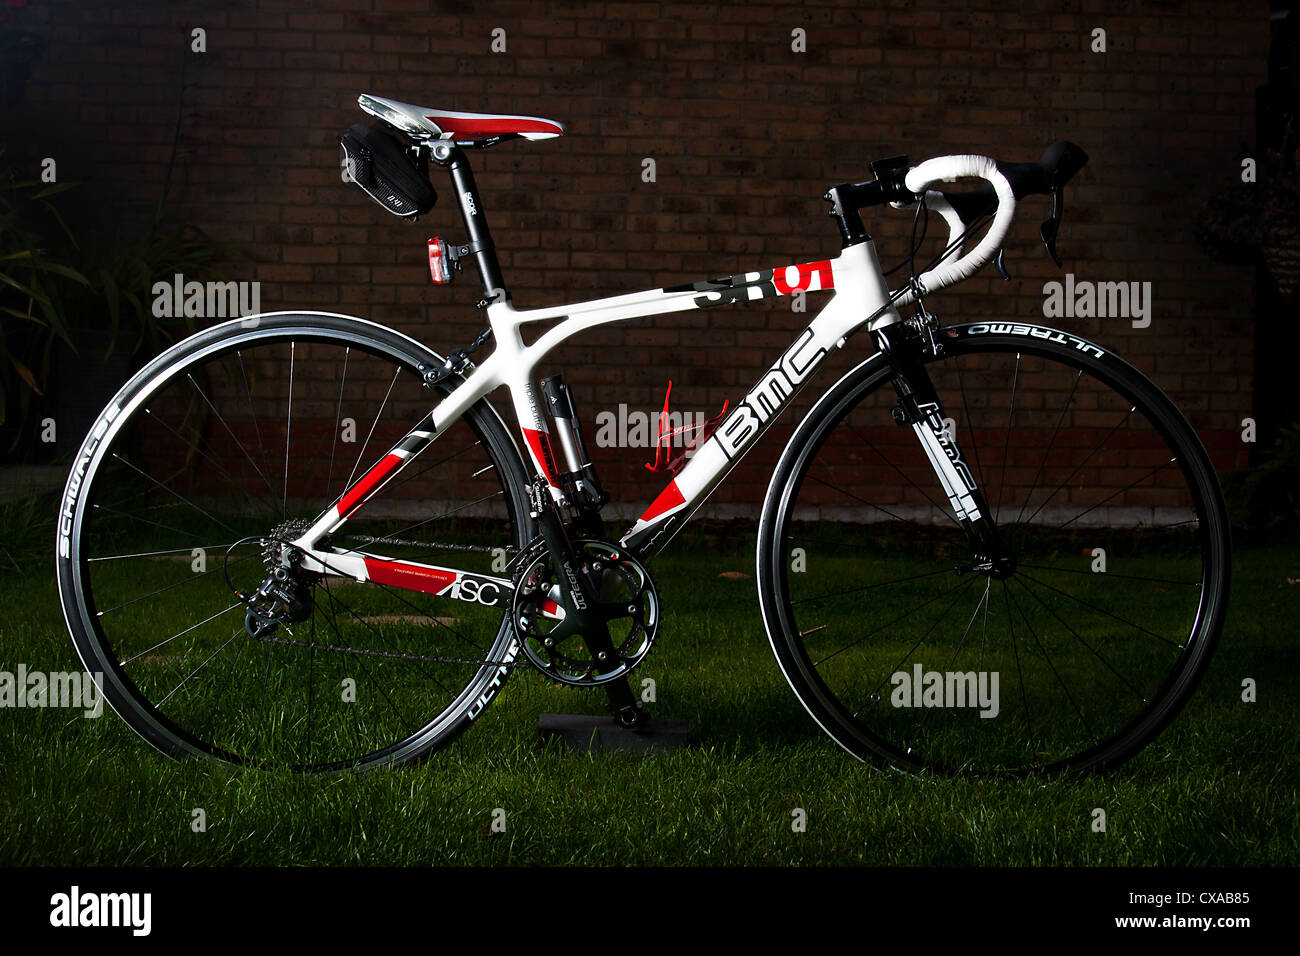 BMC SR01 racing bike Stock Photo